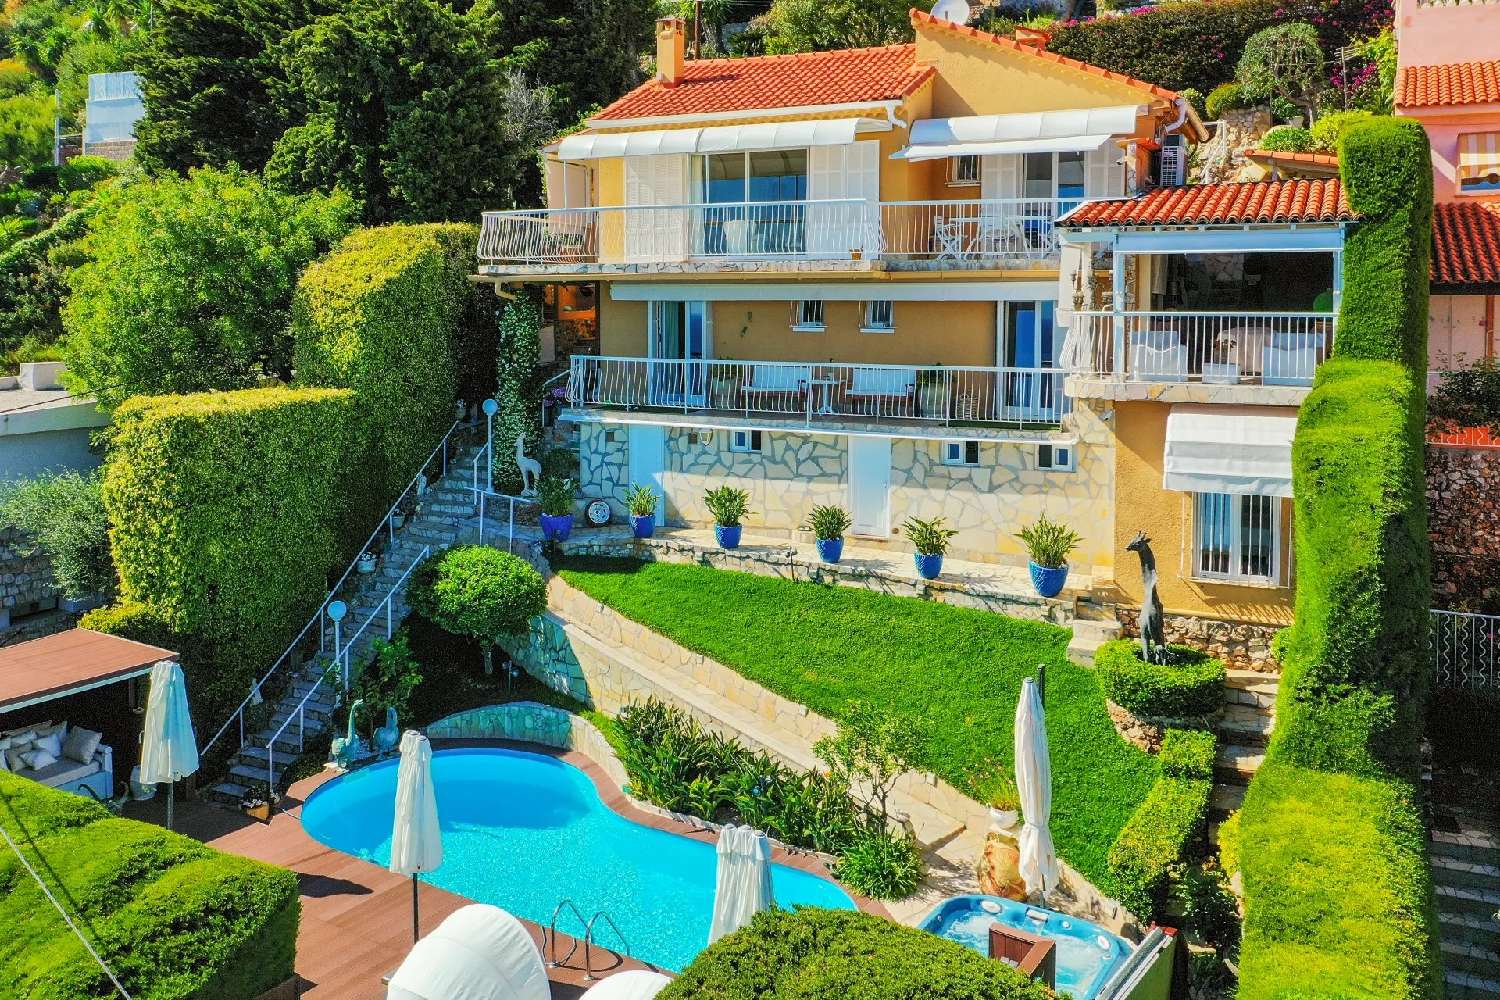  for sale villa Cap-d'Ail Alpes-Maritimes 1